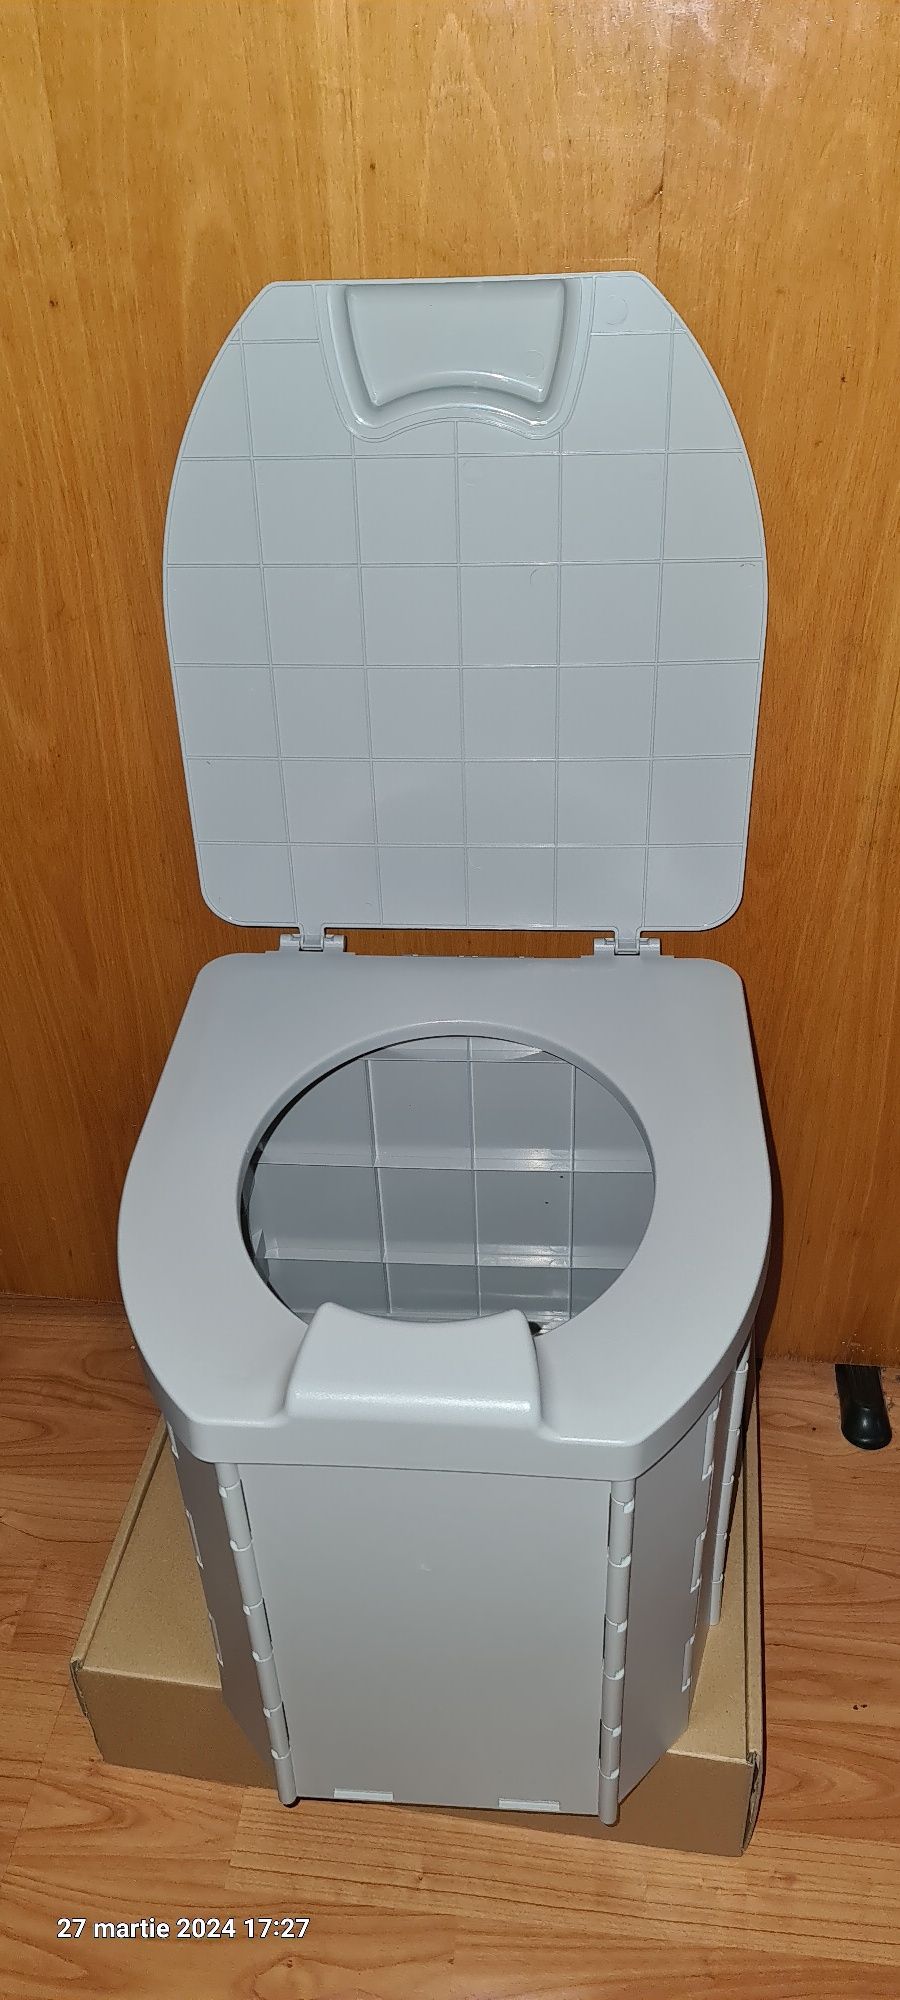 Wc portabil pliabil toaleta portabila plianta